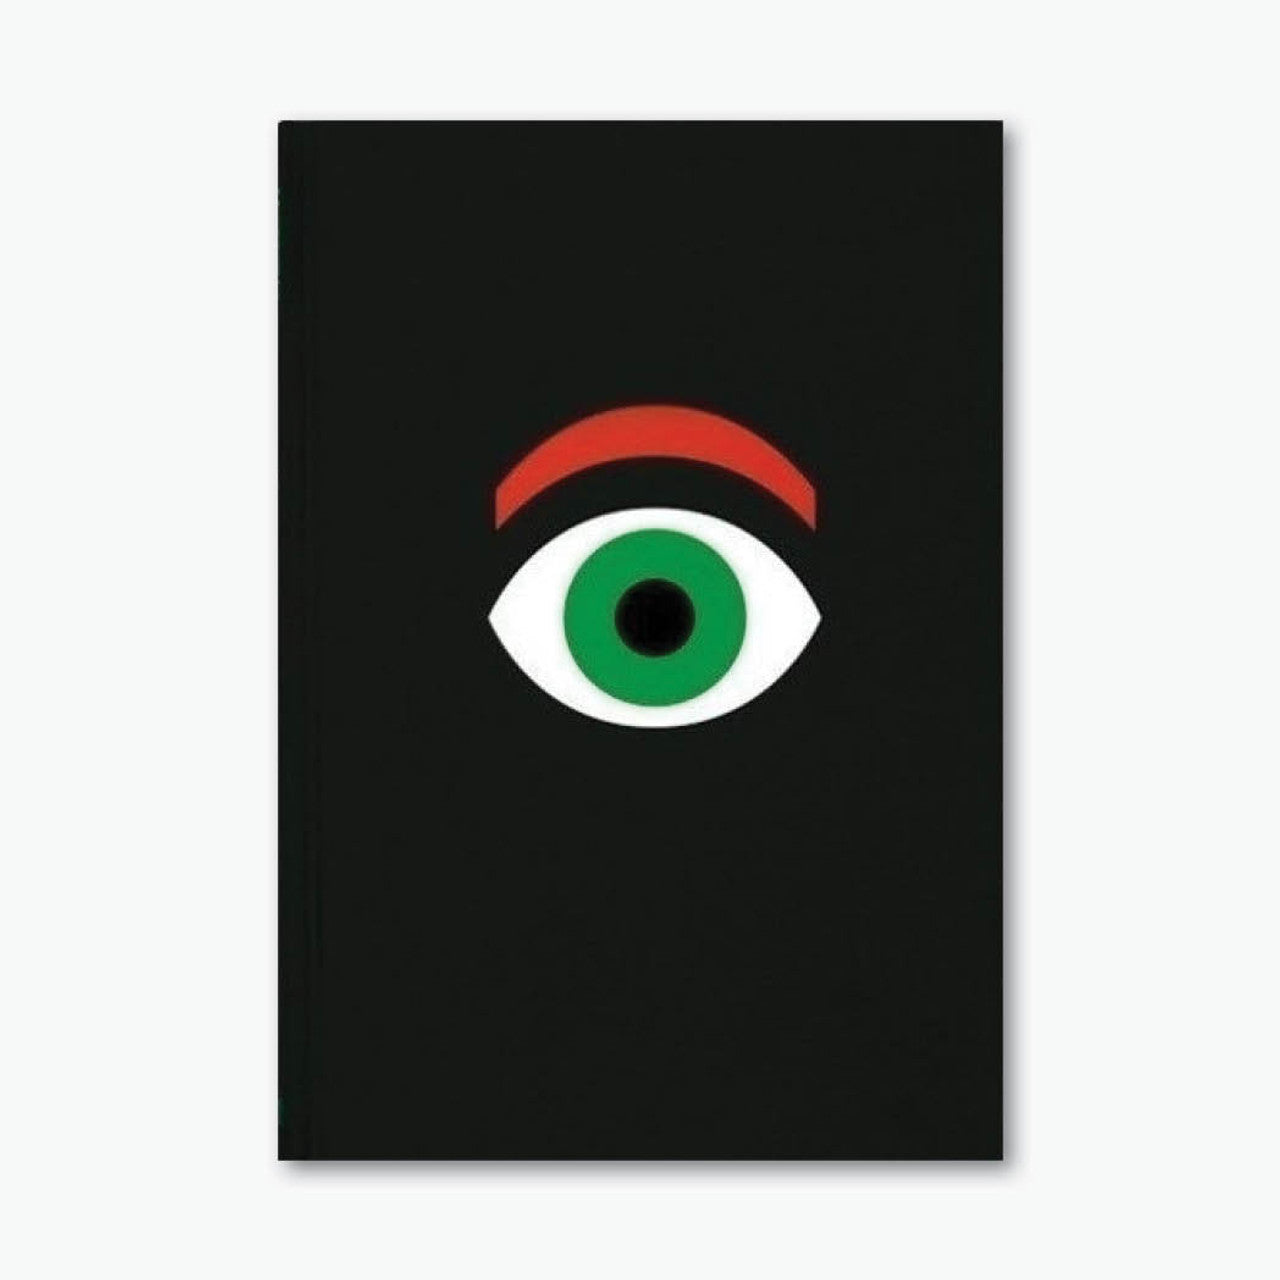 Paul Rand: A Designers Eye